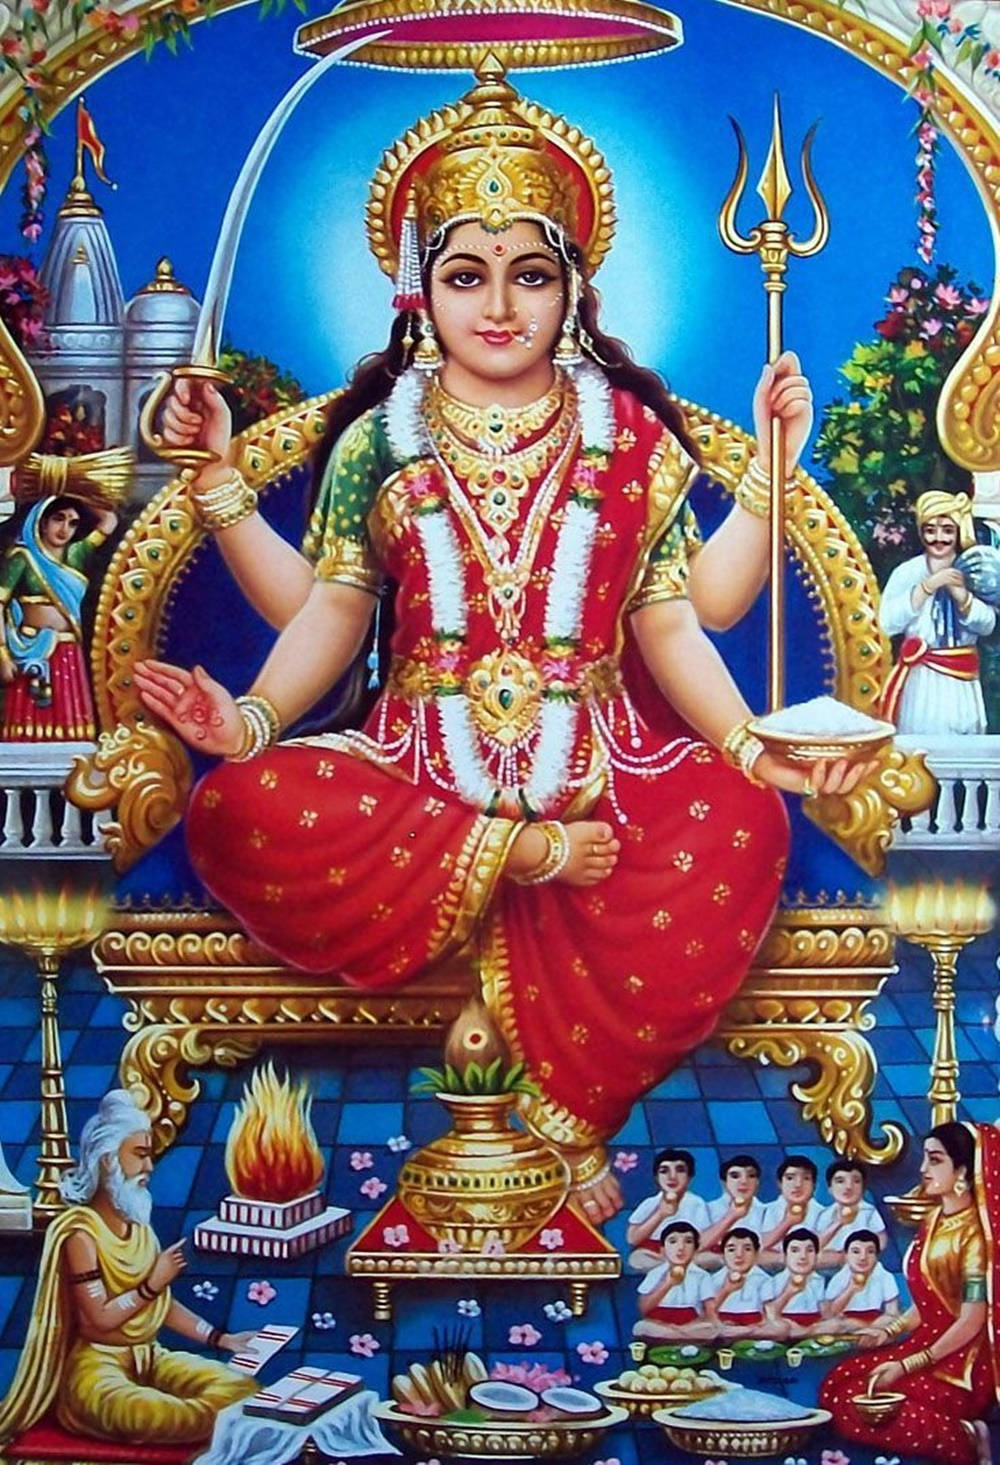 Divine Santoshi Maa - The Four-handed Goddess